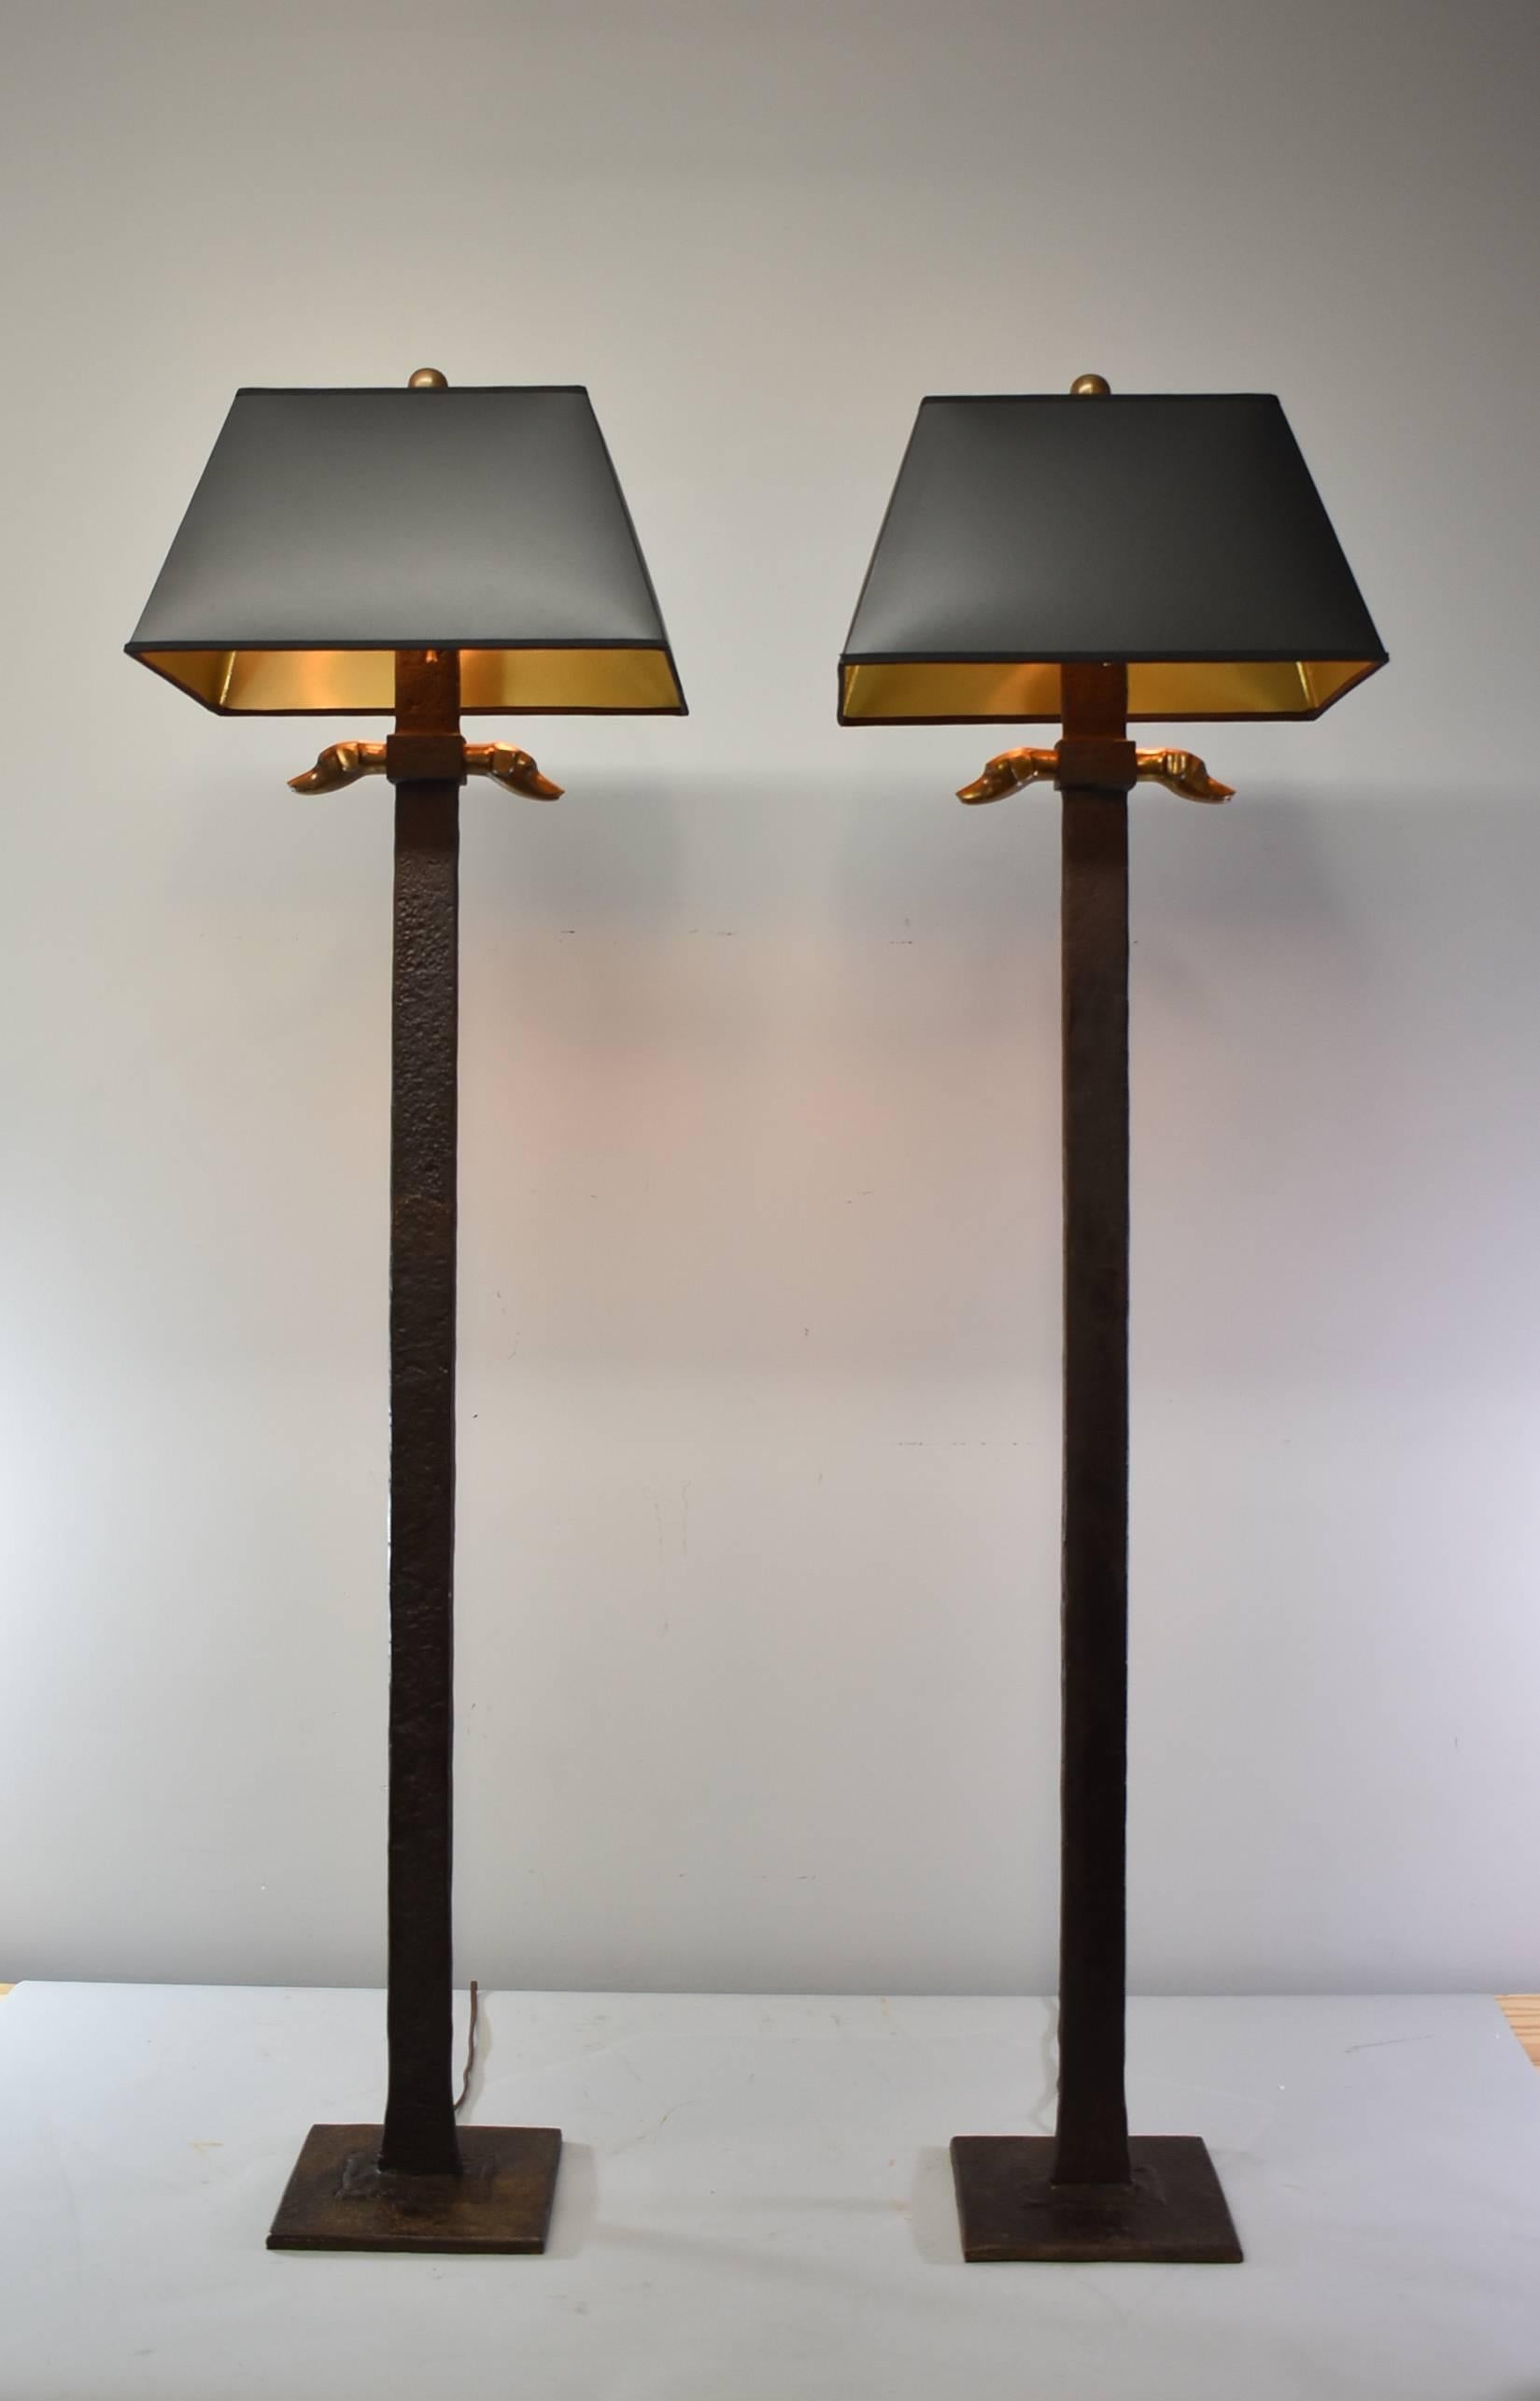 An unusual pair of iron floor lamps by Chapman. Measure: Each lamp is 54